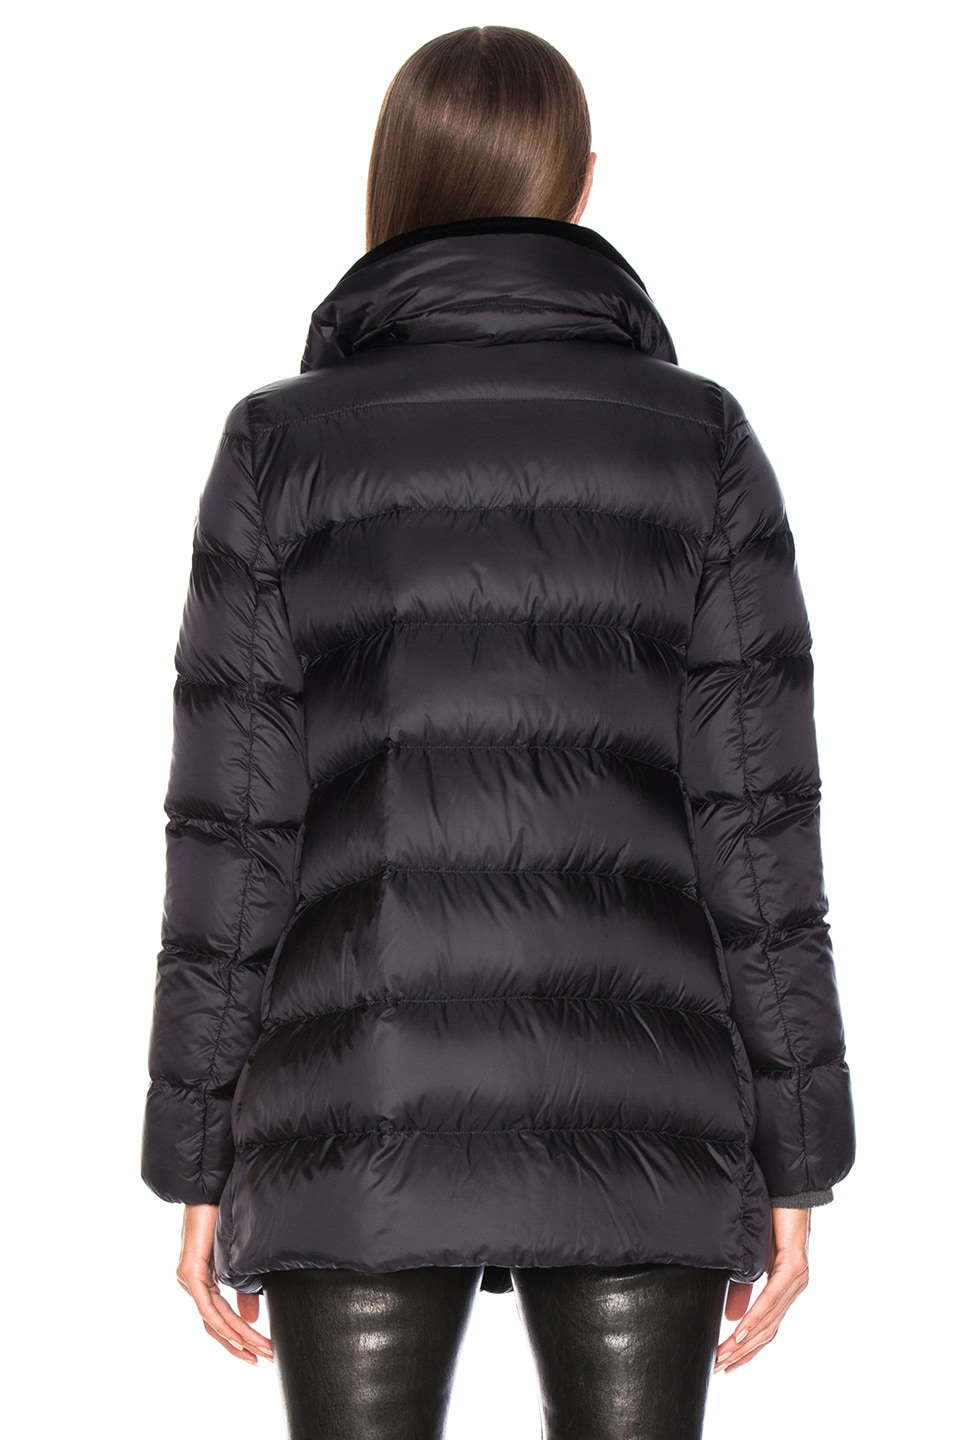 Moncler Torcol Giubbotto Jacket in Black | FWRD